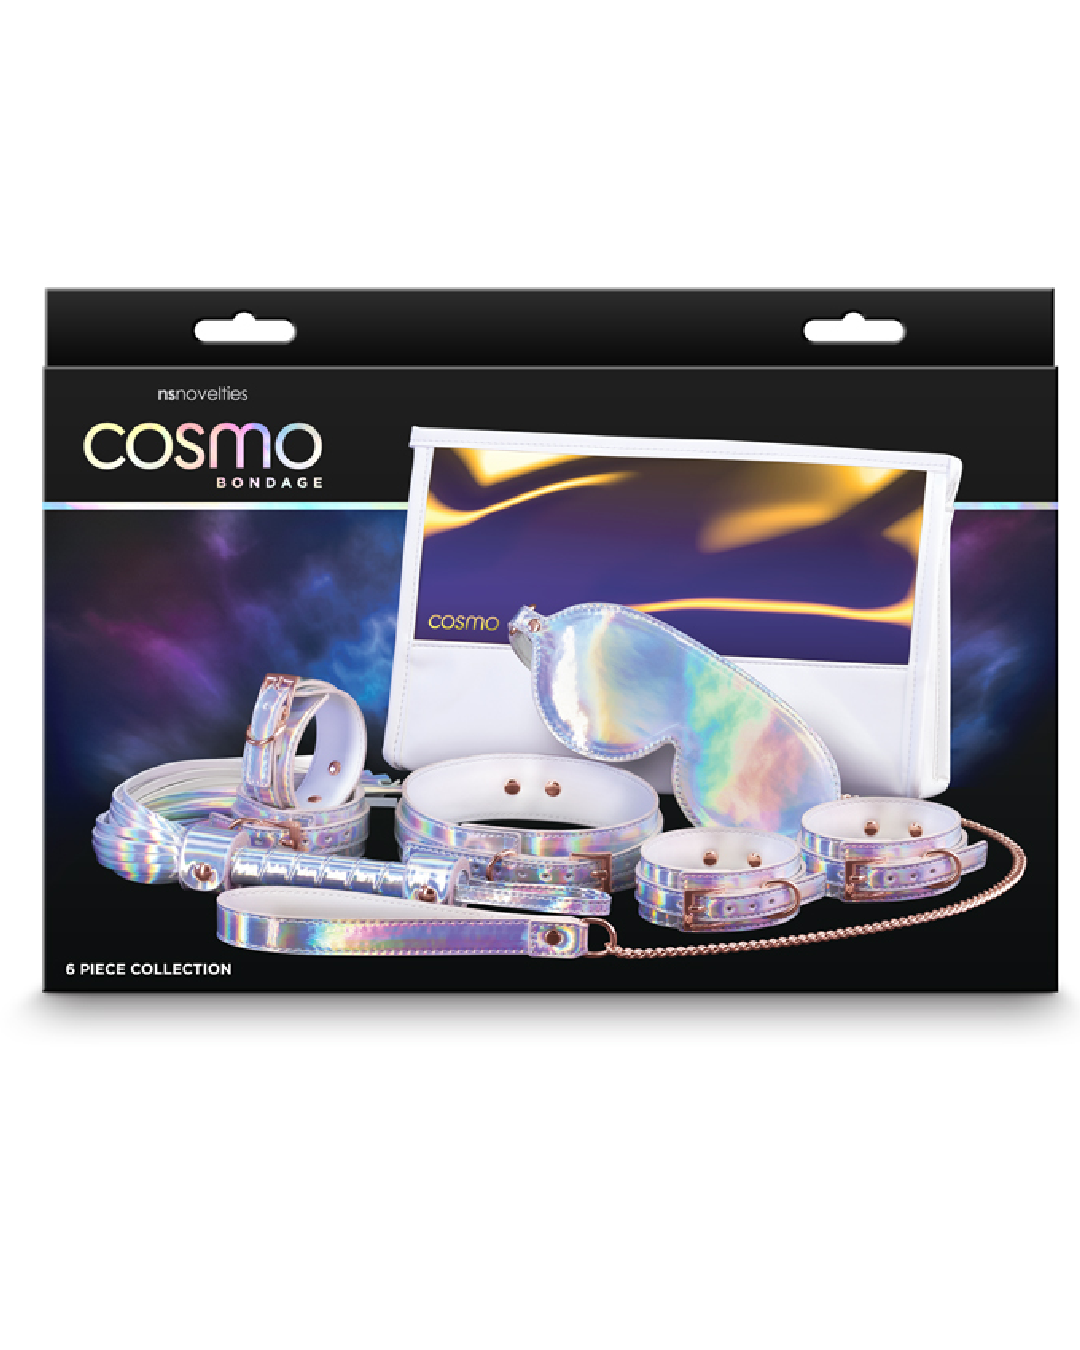 Cosmo Bondage Holographic 6 Piece Set box 